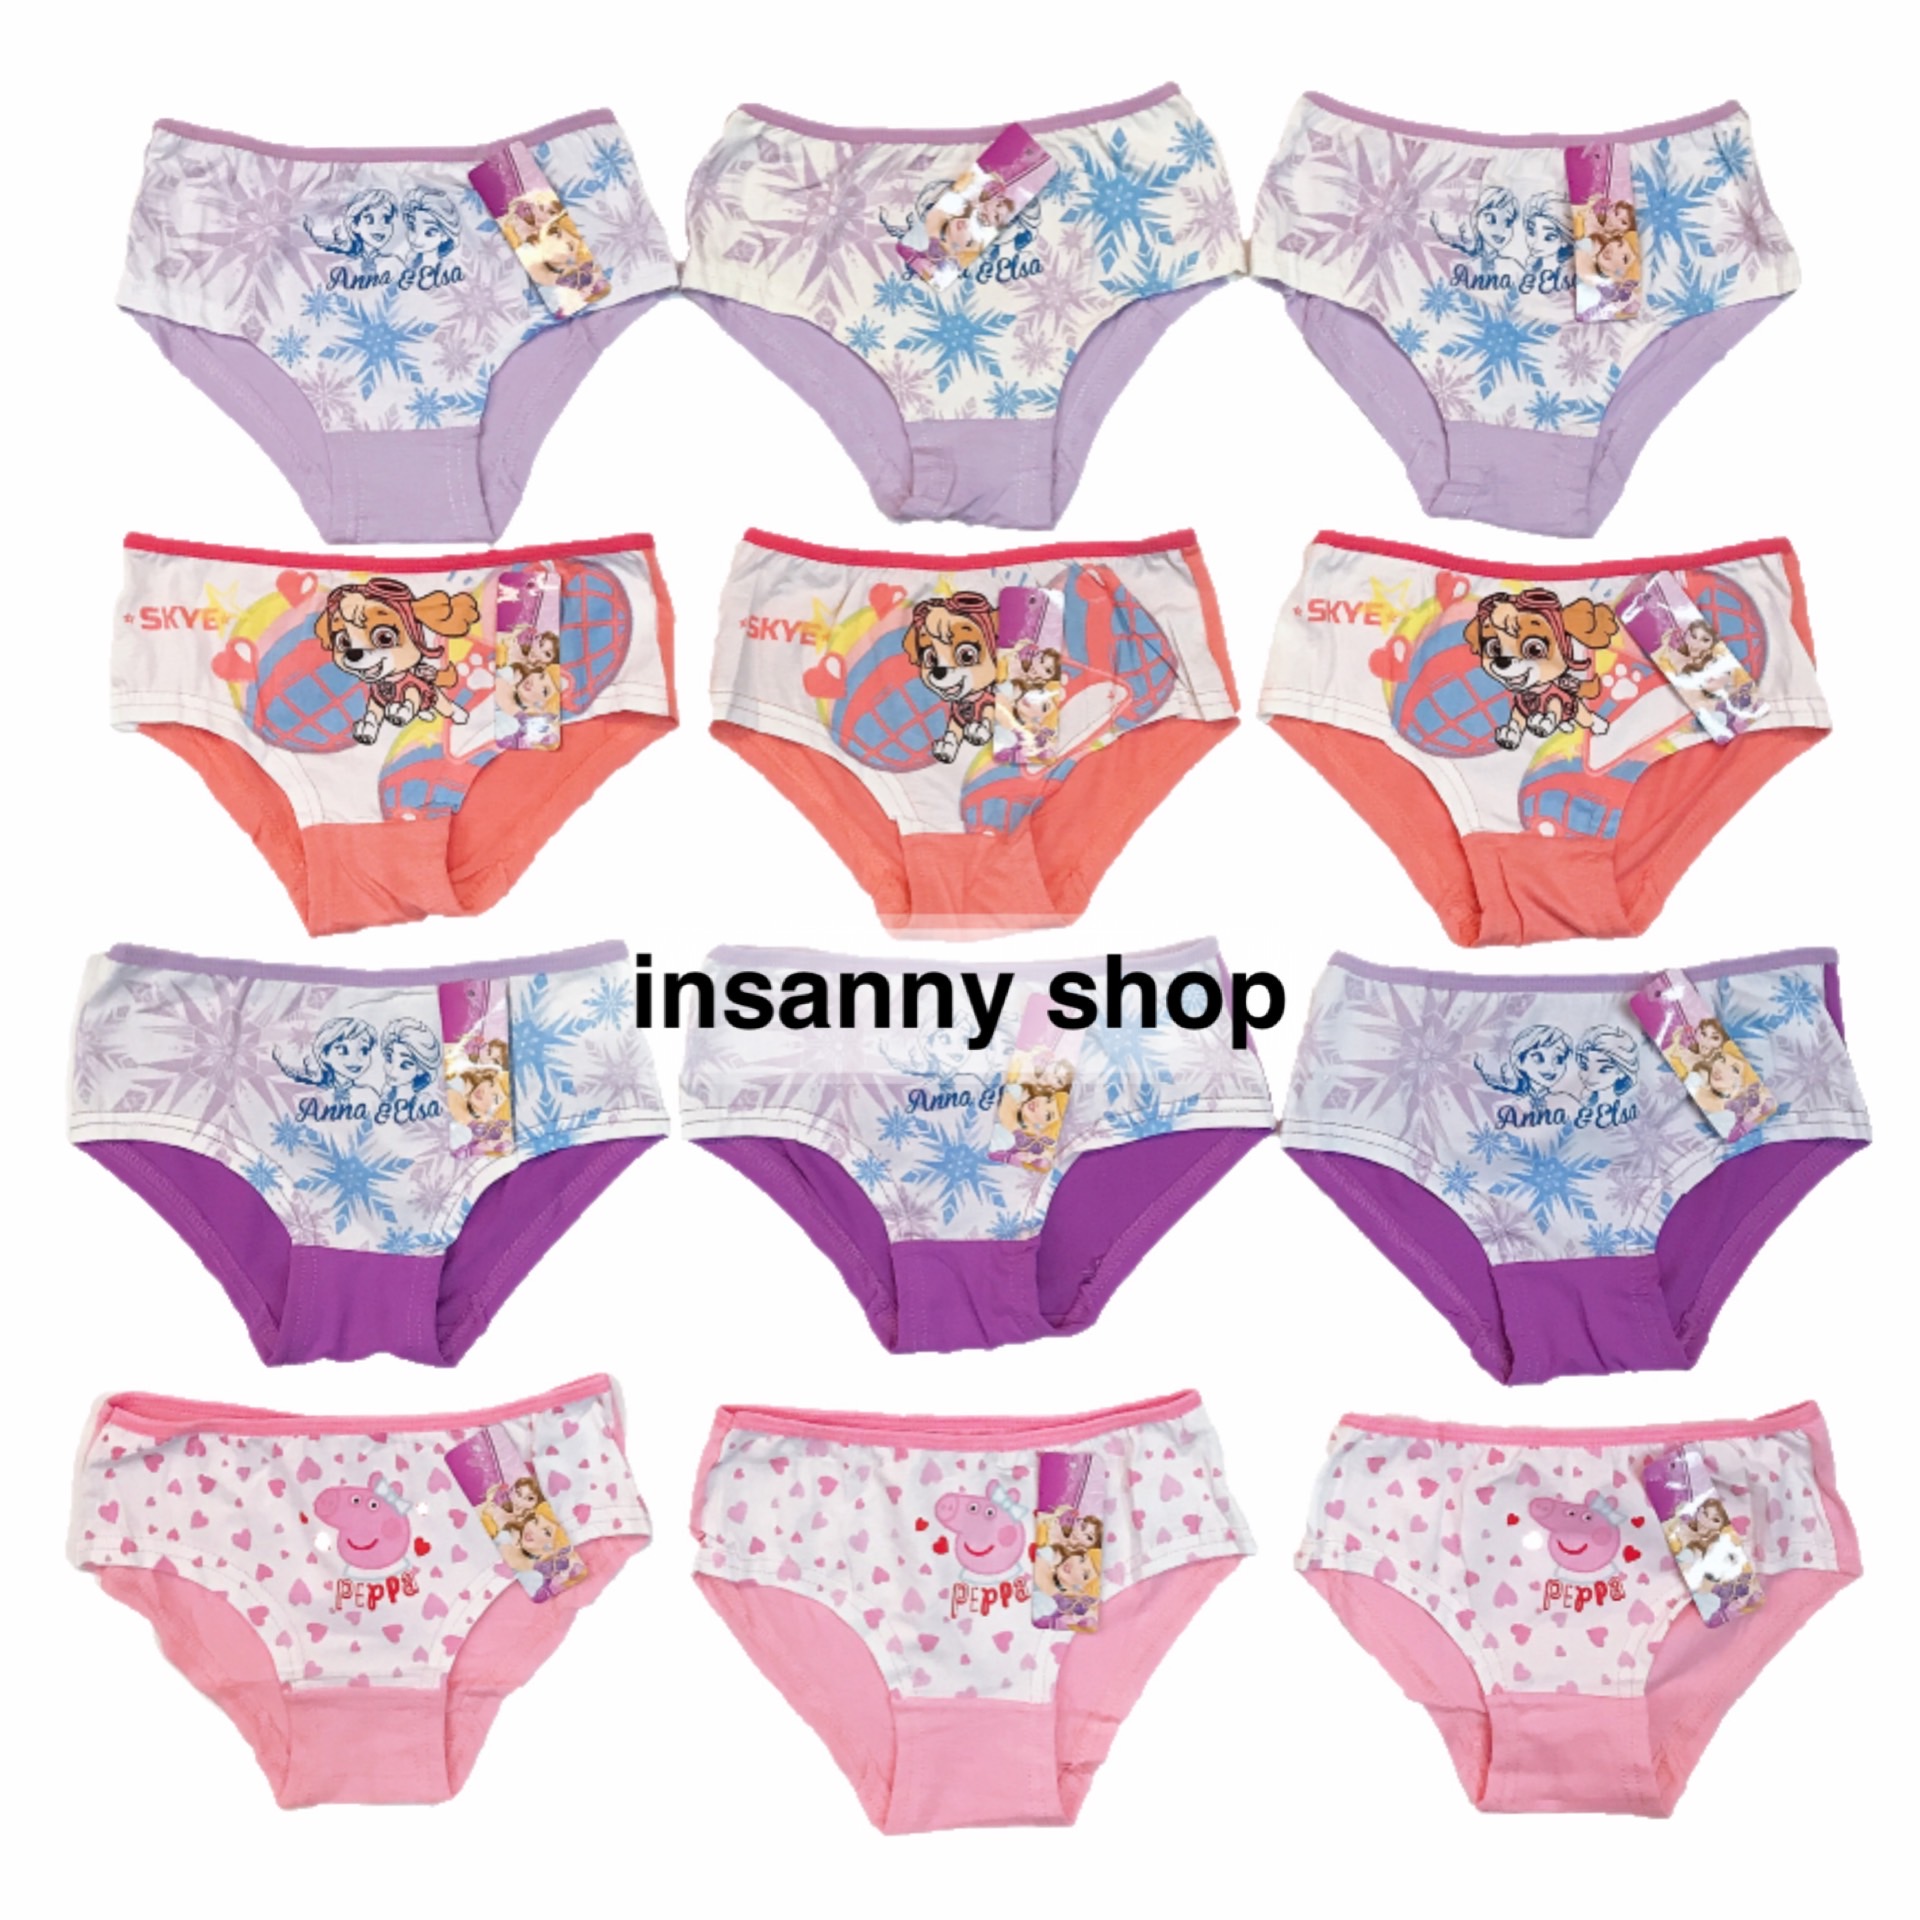 Disney Princess 3-in1 Pack Bikini Panty Girls Kids Underwear